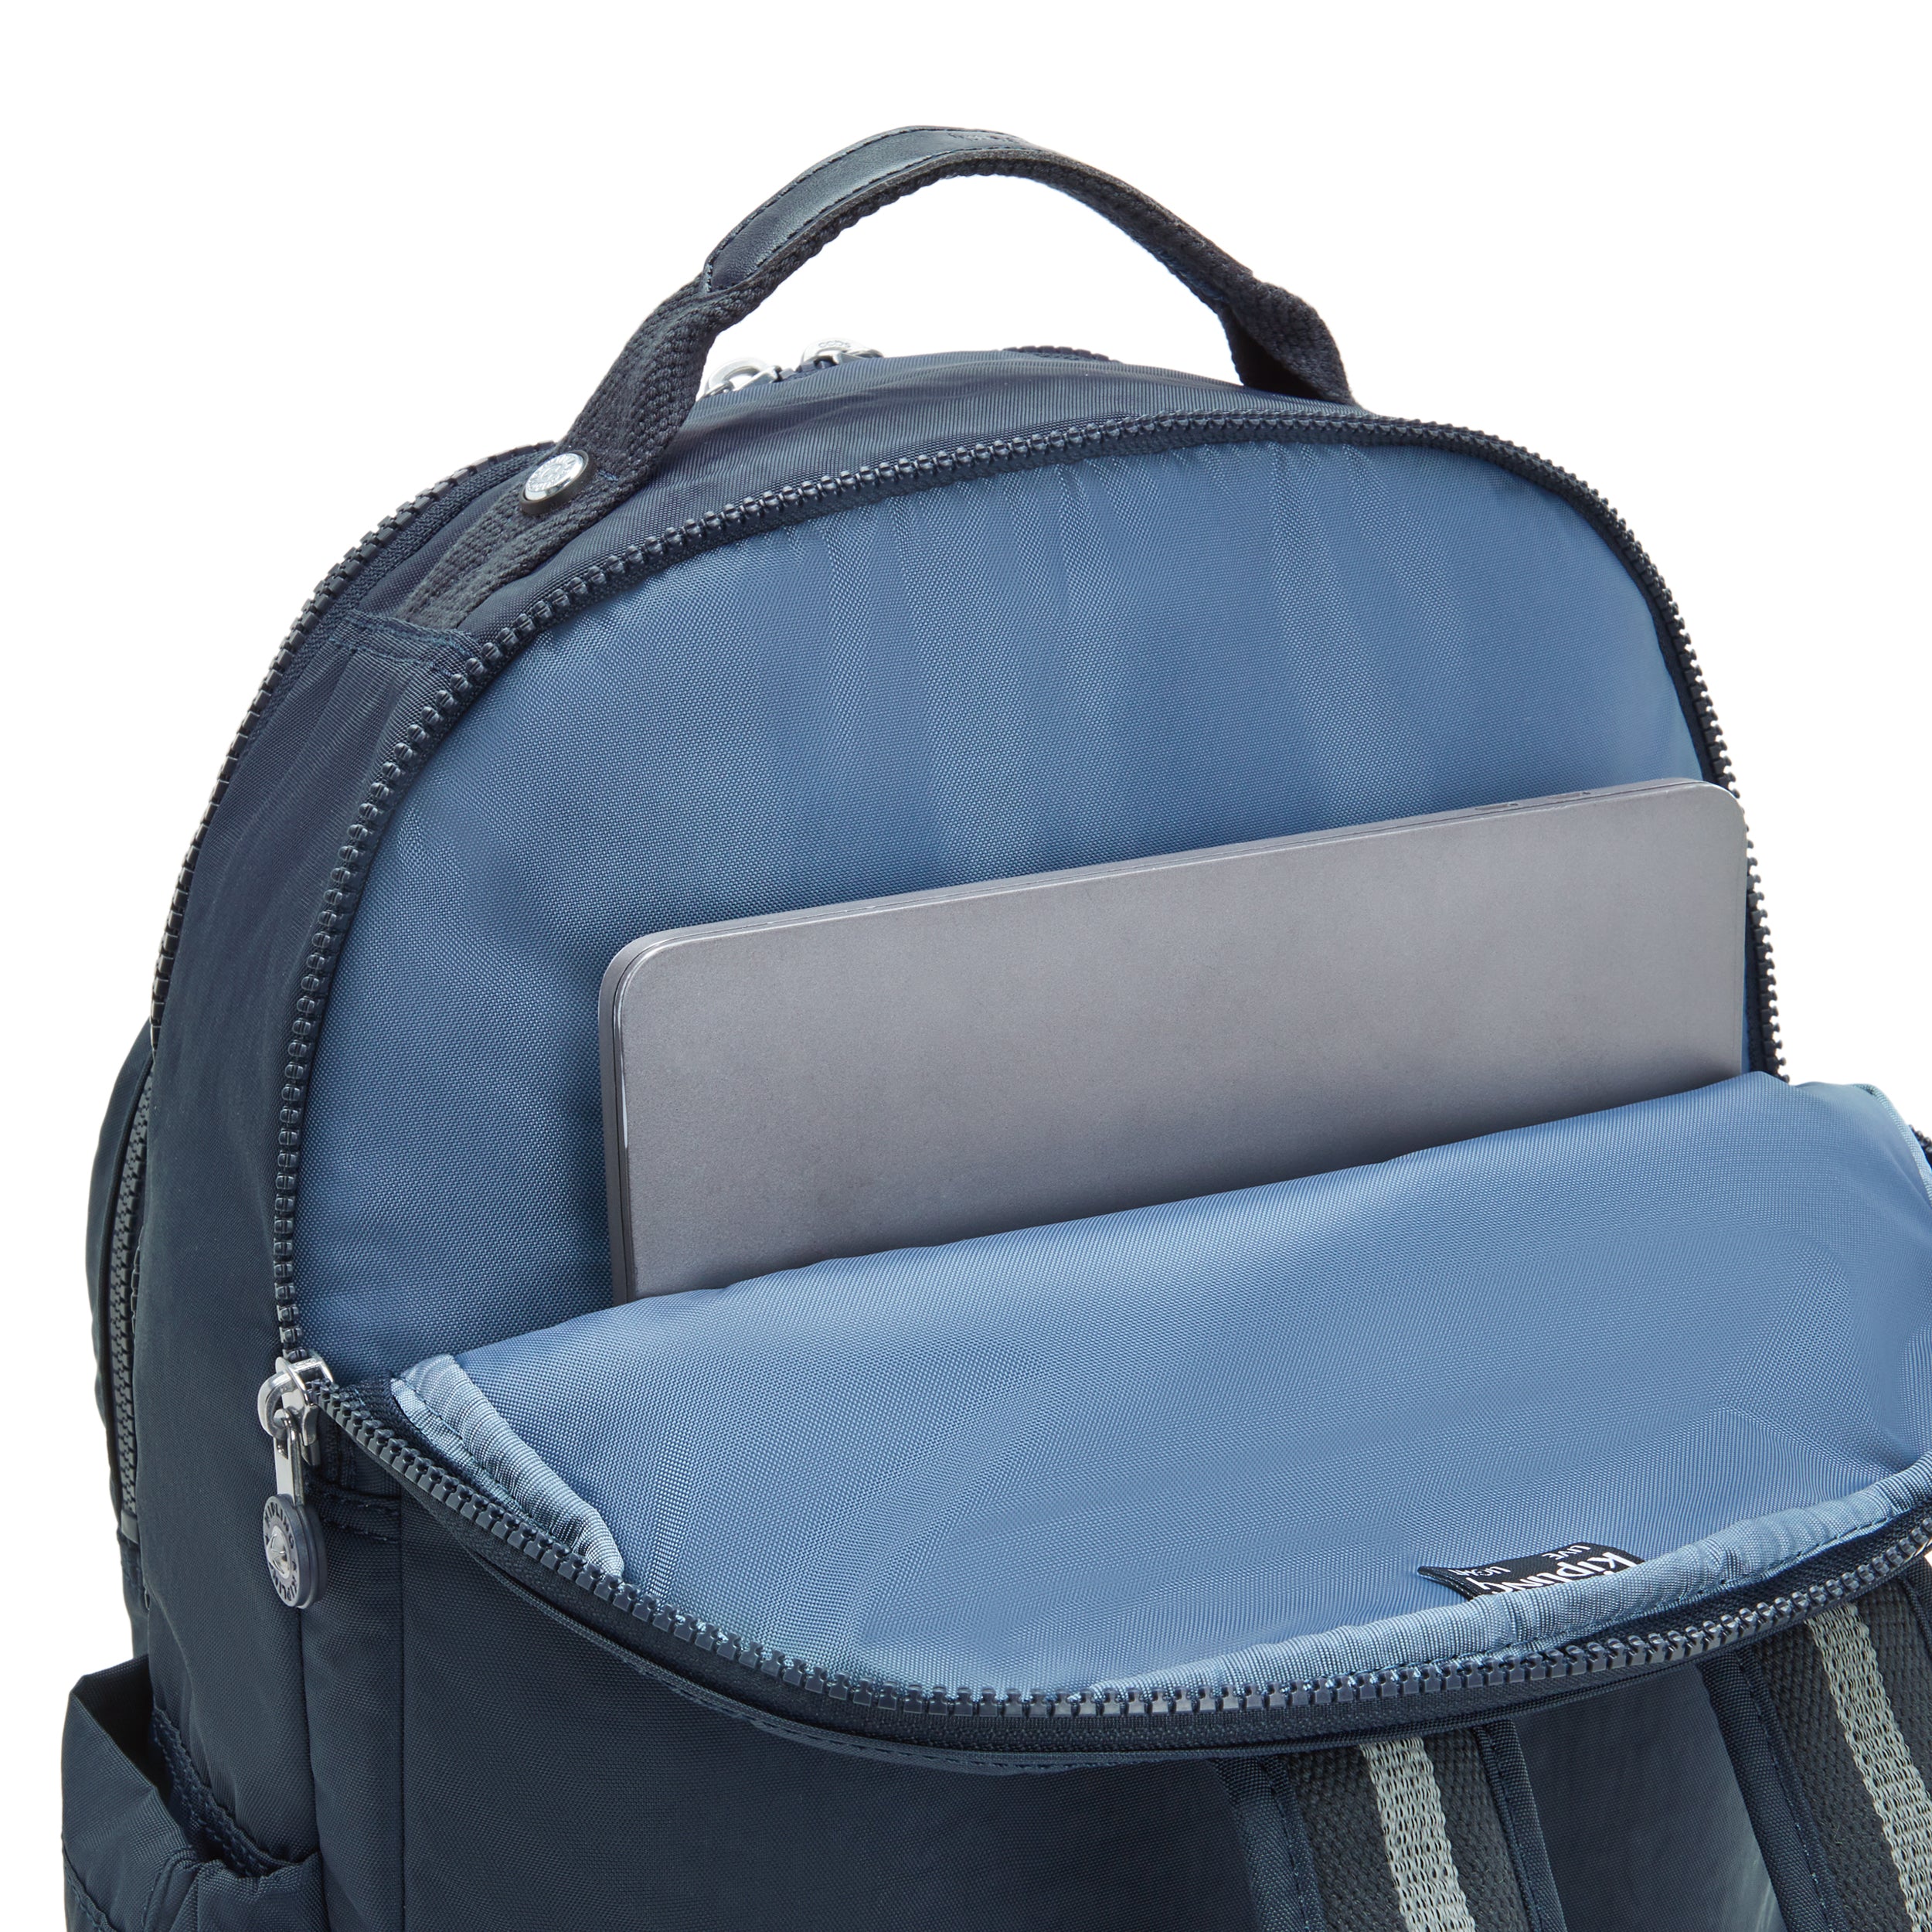 KIPLING- حقيبة ظهر سيول لاب كبيرة (مع حجرة كمبيوتر محمول) - أزرق حقيقي - I4275-4DX